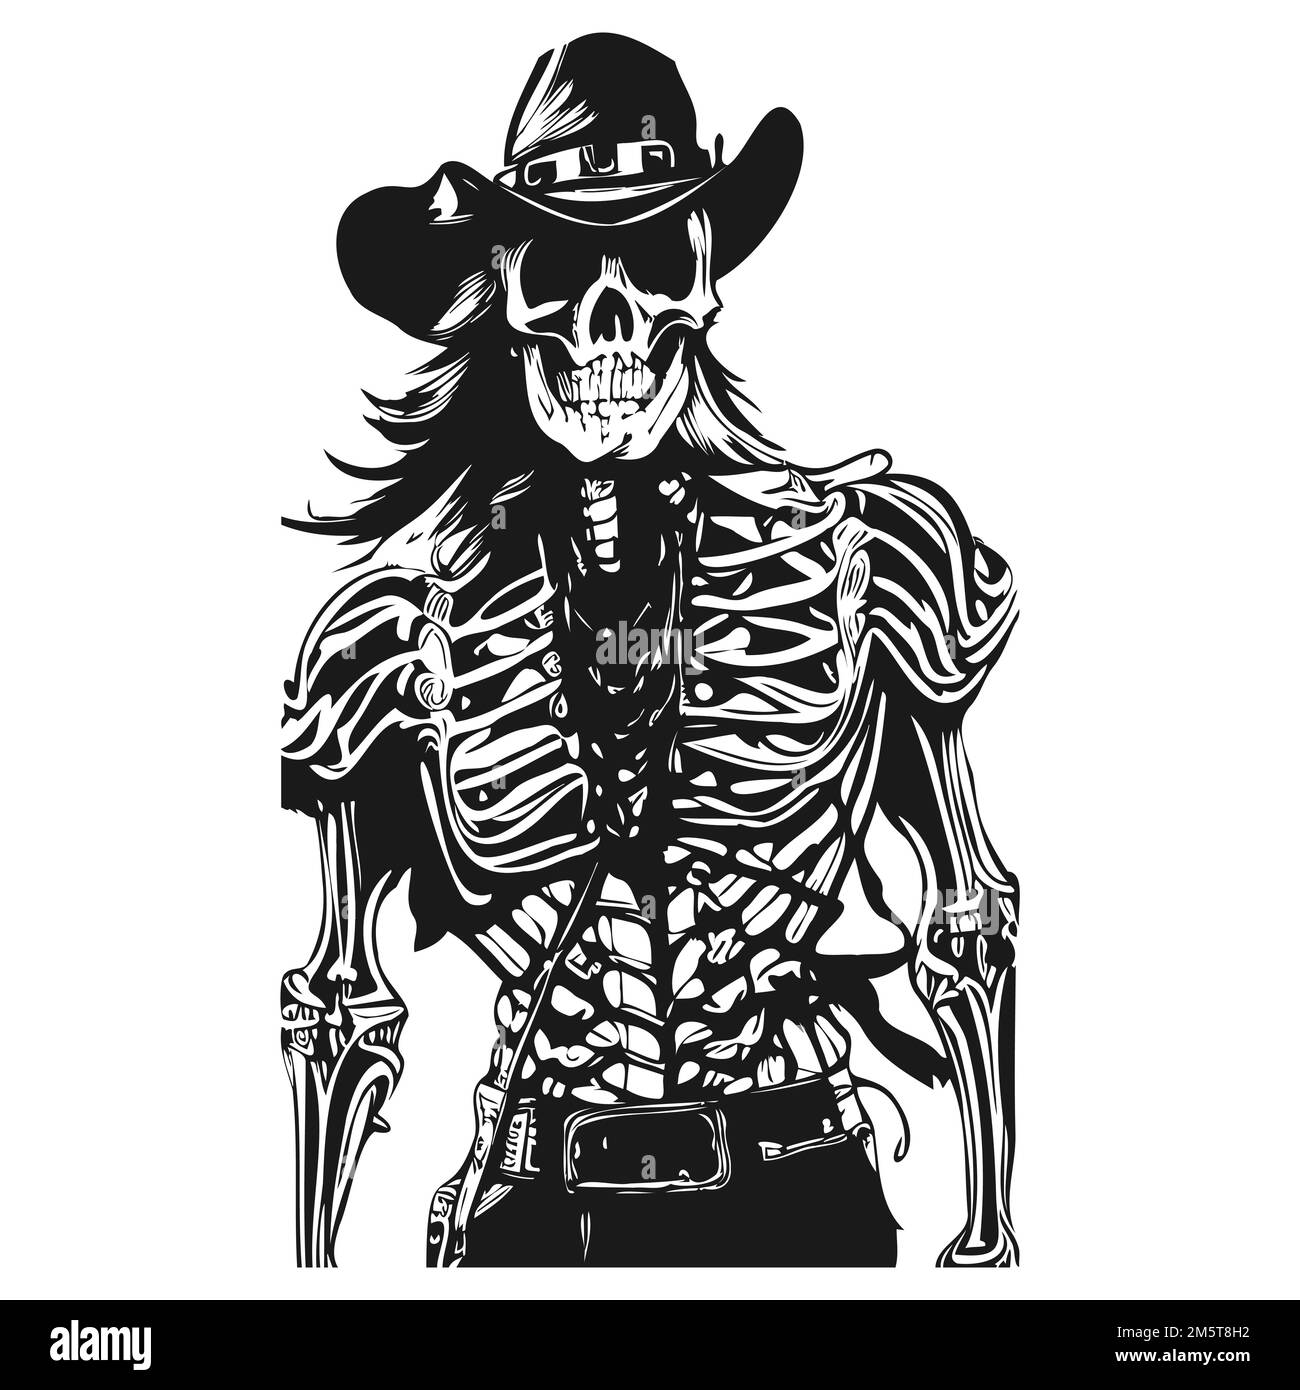 90 Cowboy Skeleton Tattoo Designs Drawings Illustrations RoyaltyFree  Vector Graphics  Clip Art  iStock